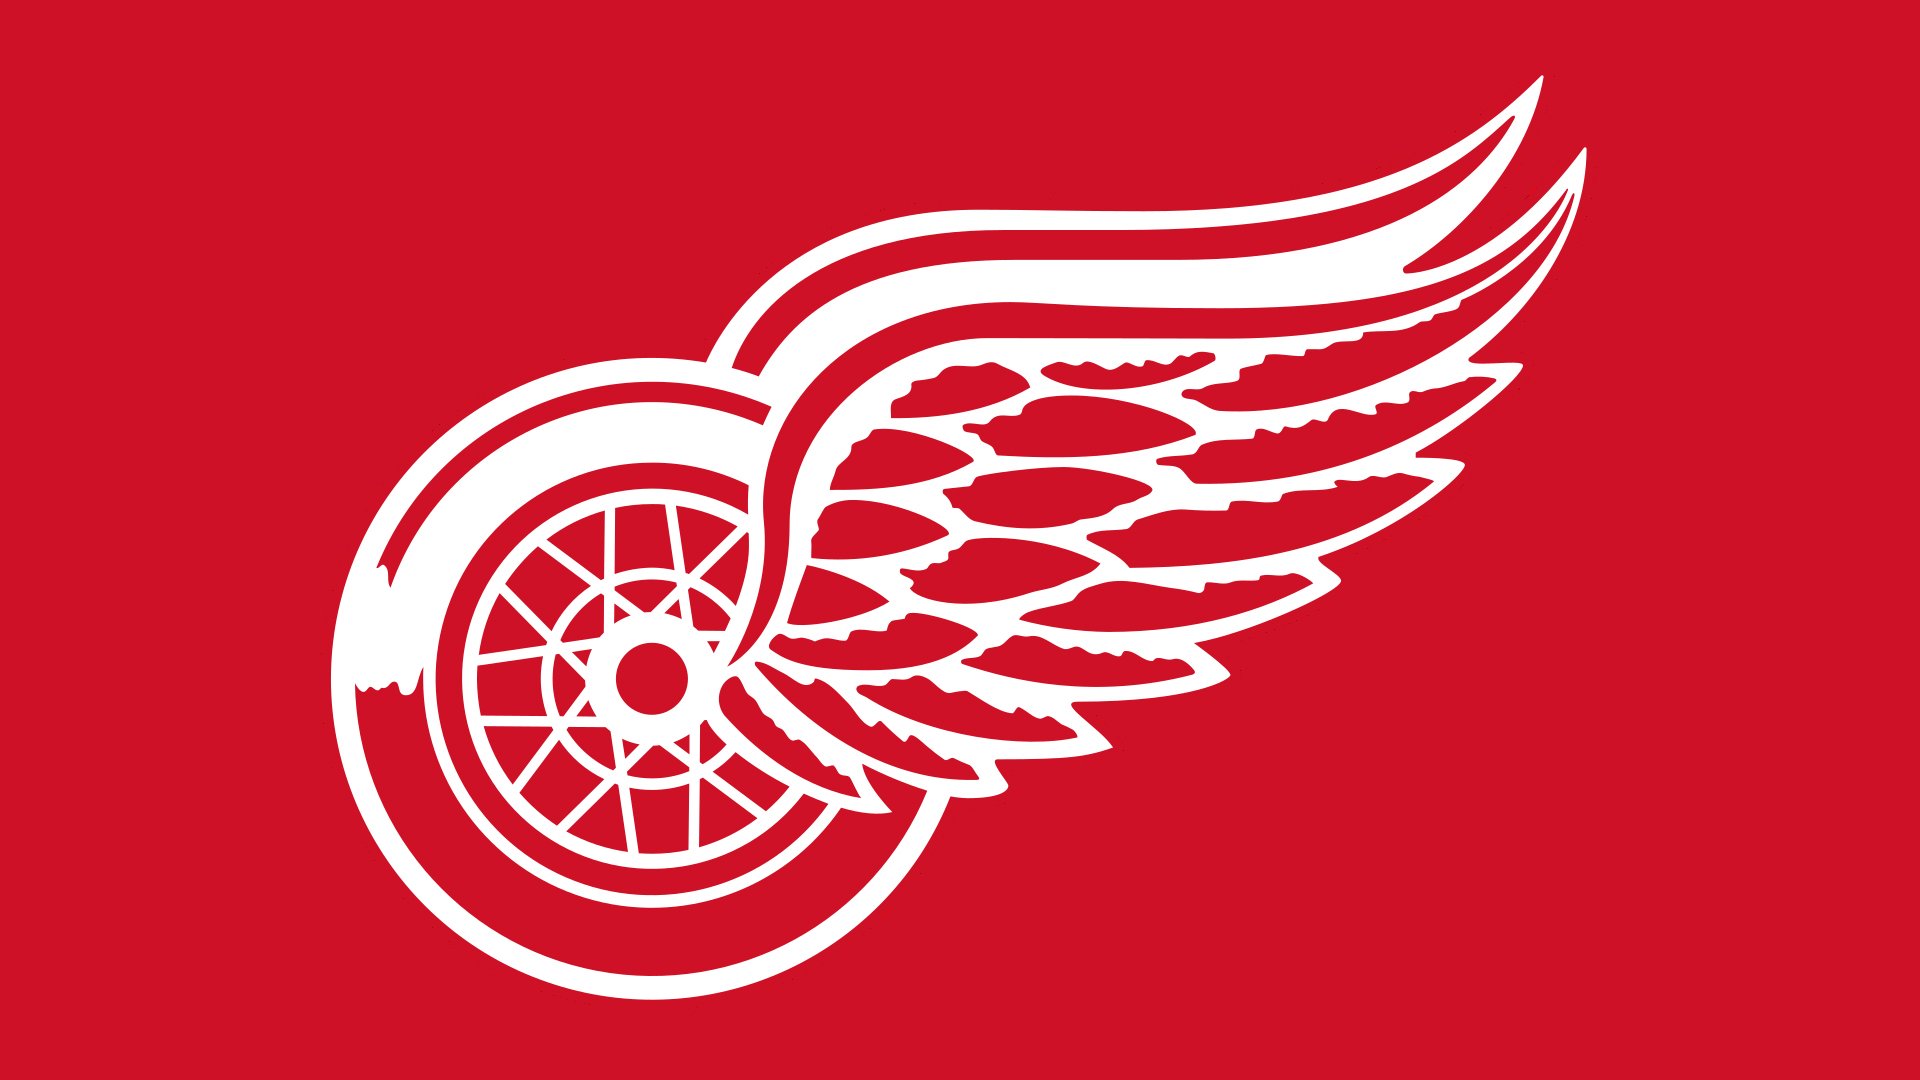 Detroit Redwings 2016 Stadium Series logo, Brands of the World™